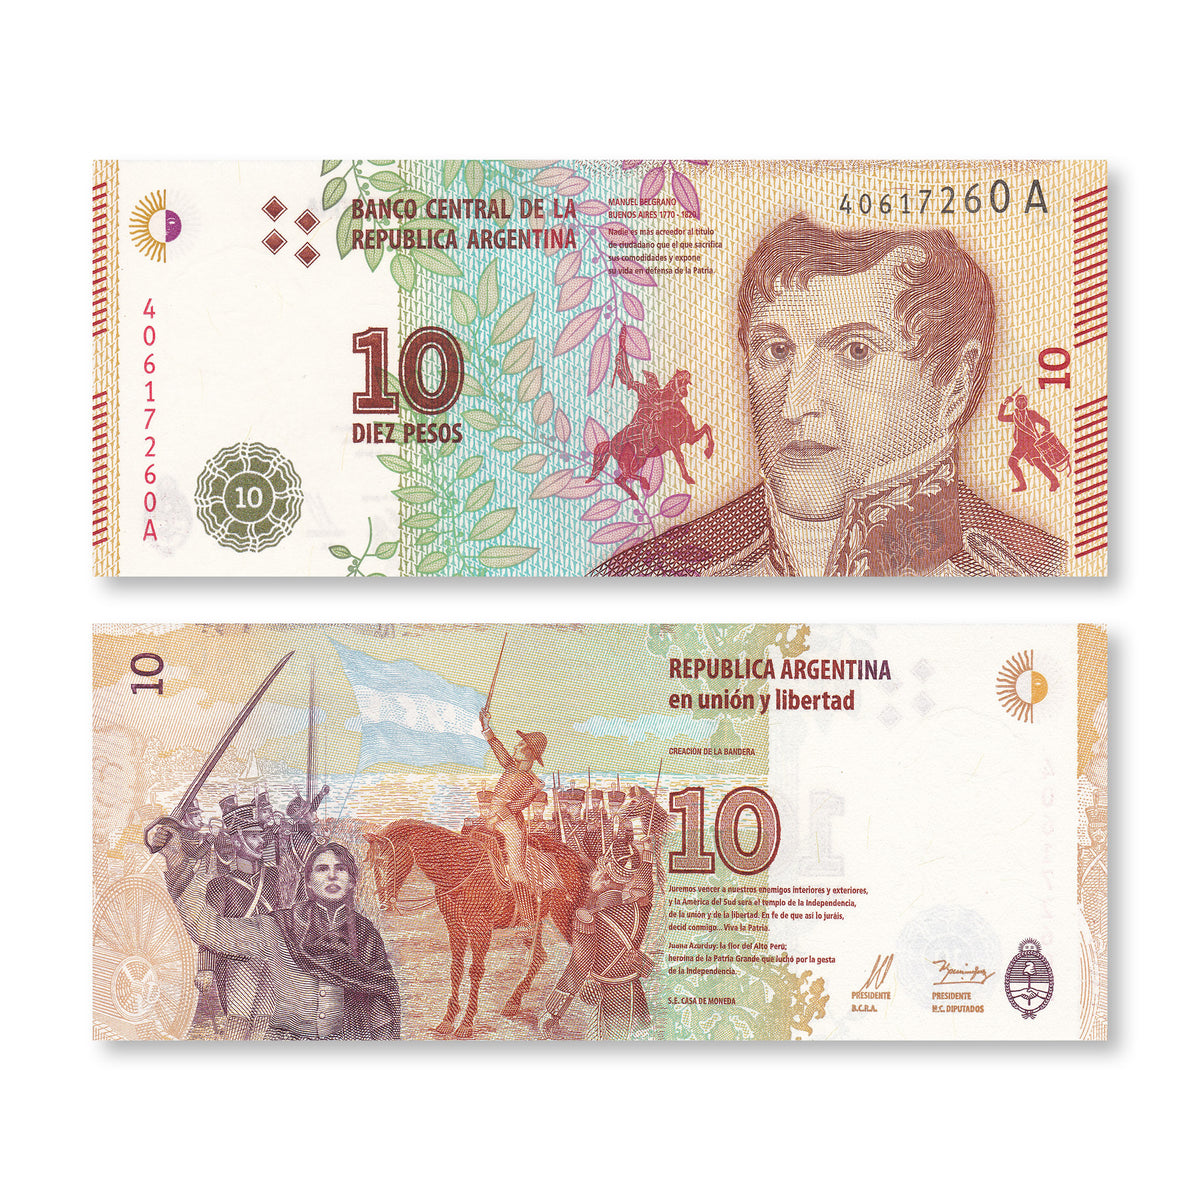 Argentina 10 Pesos, 2016, B416a, P360, UNC - Robert's World Money - World Banknotes